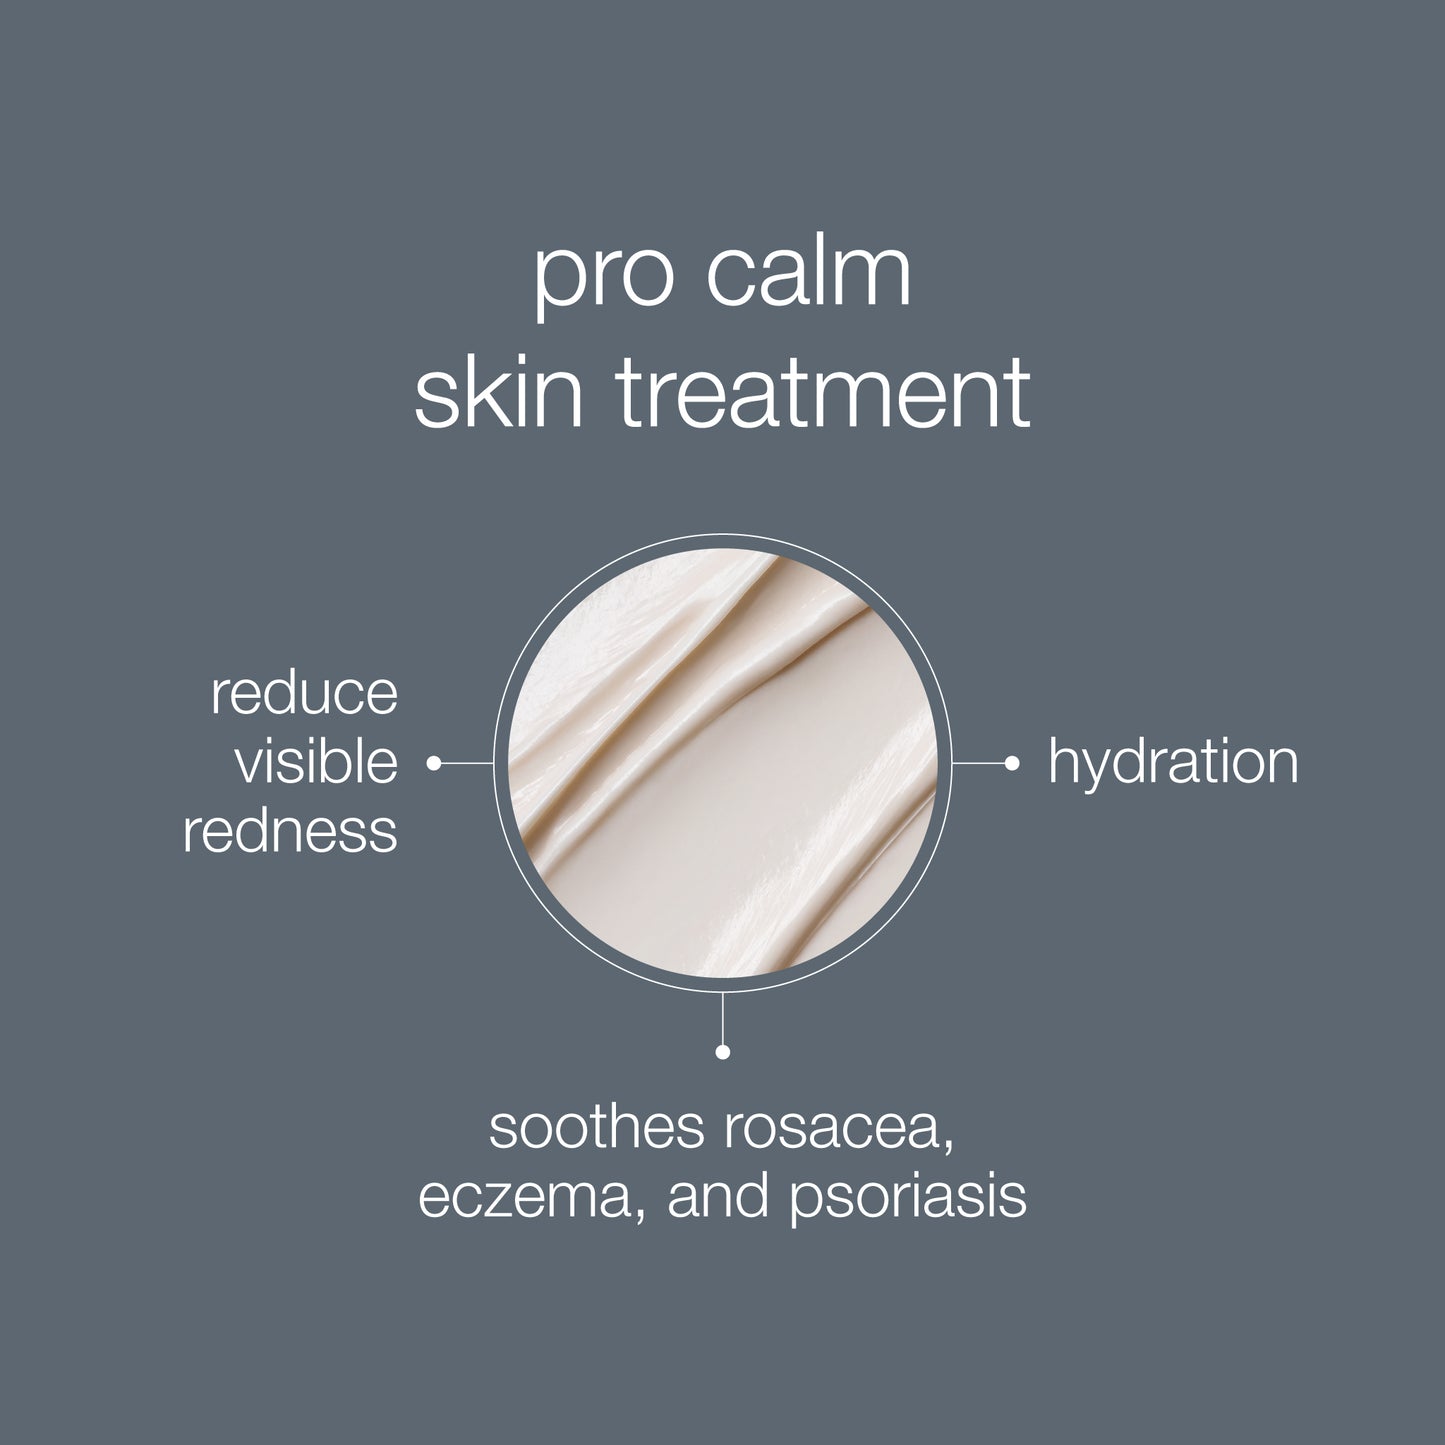 pro calm skin treatment benefits